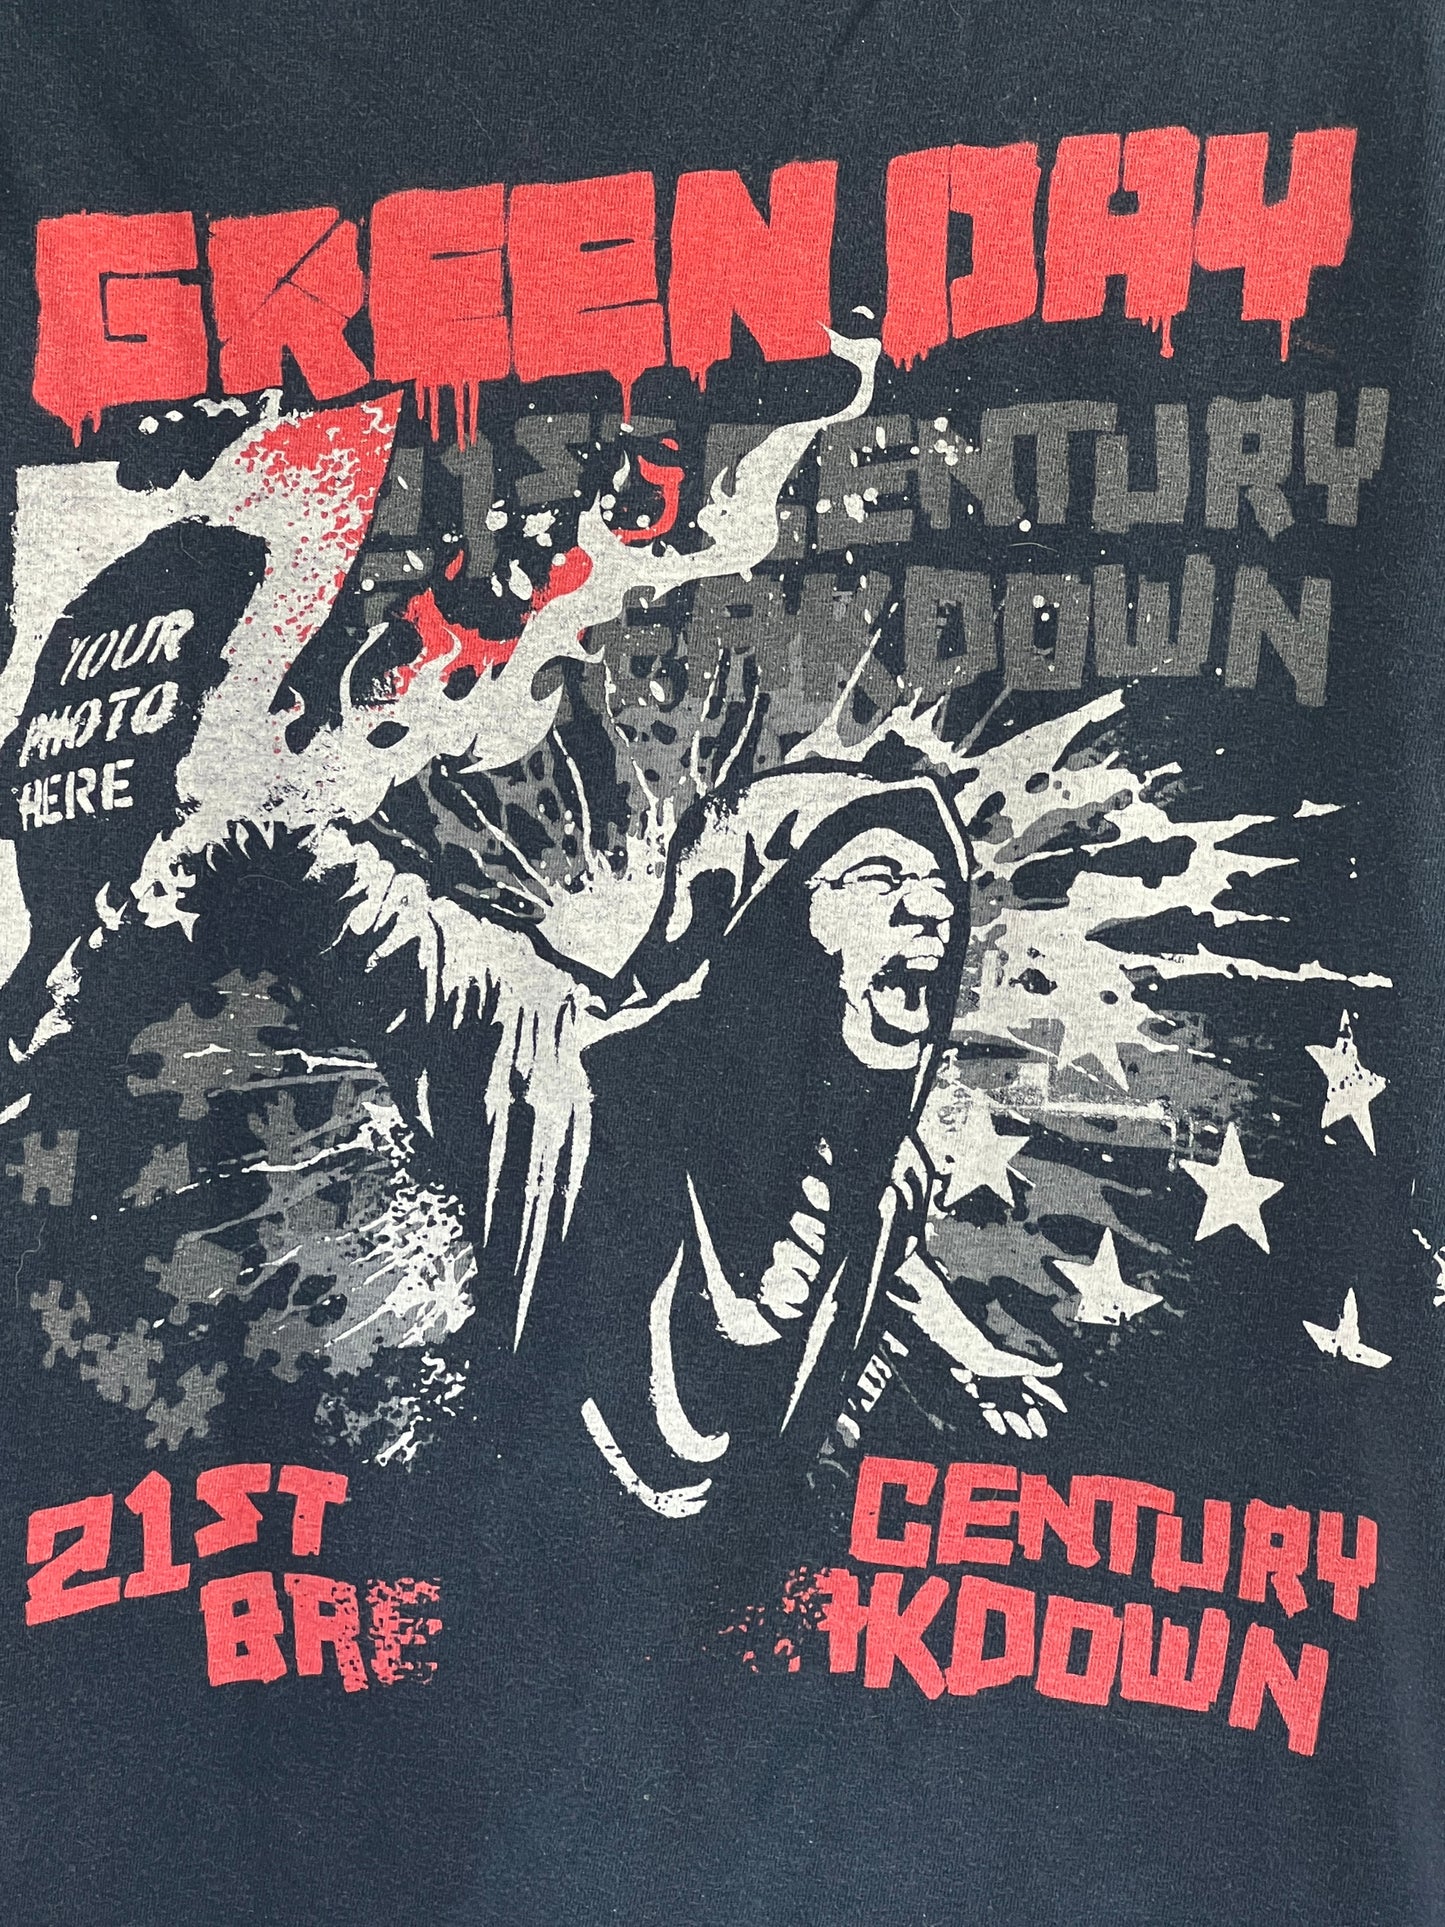 Vintage Green Day 21st century breakdown punk rock band t shirt